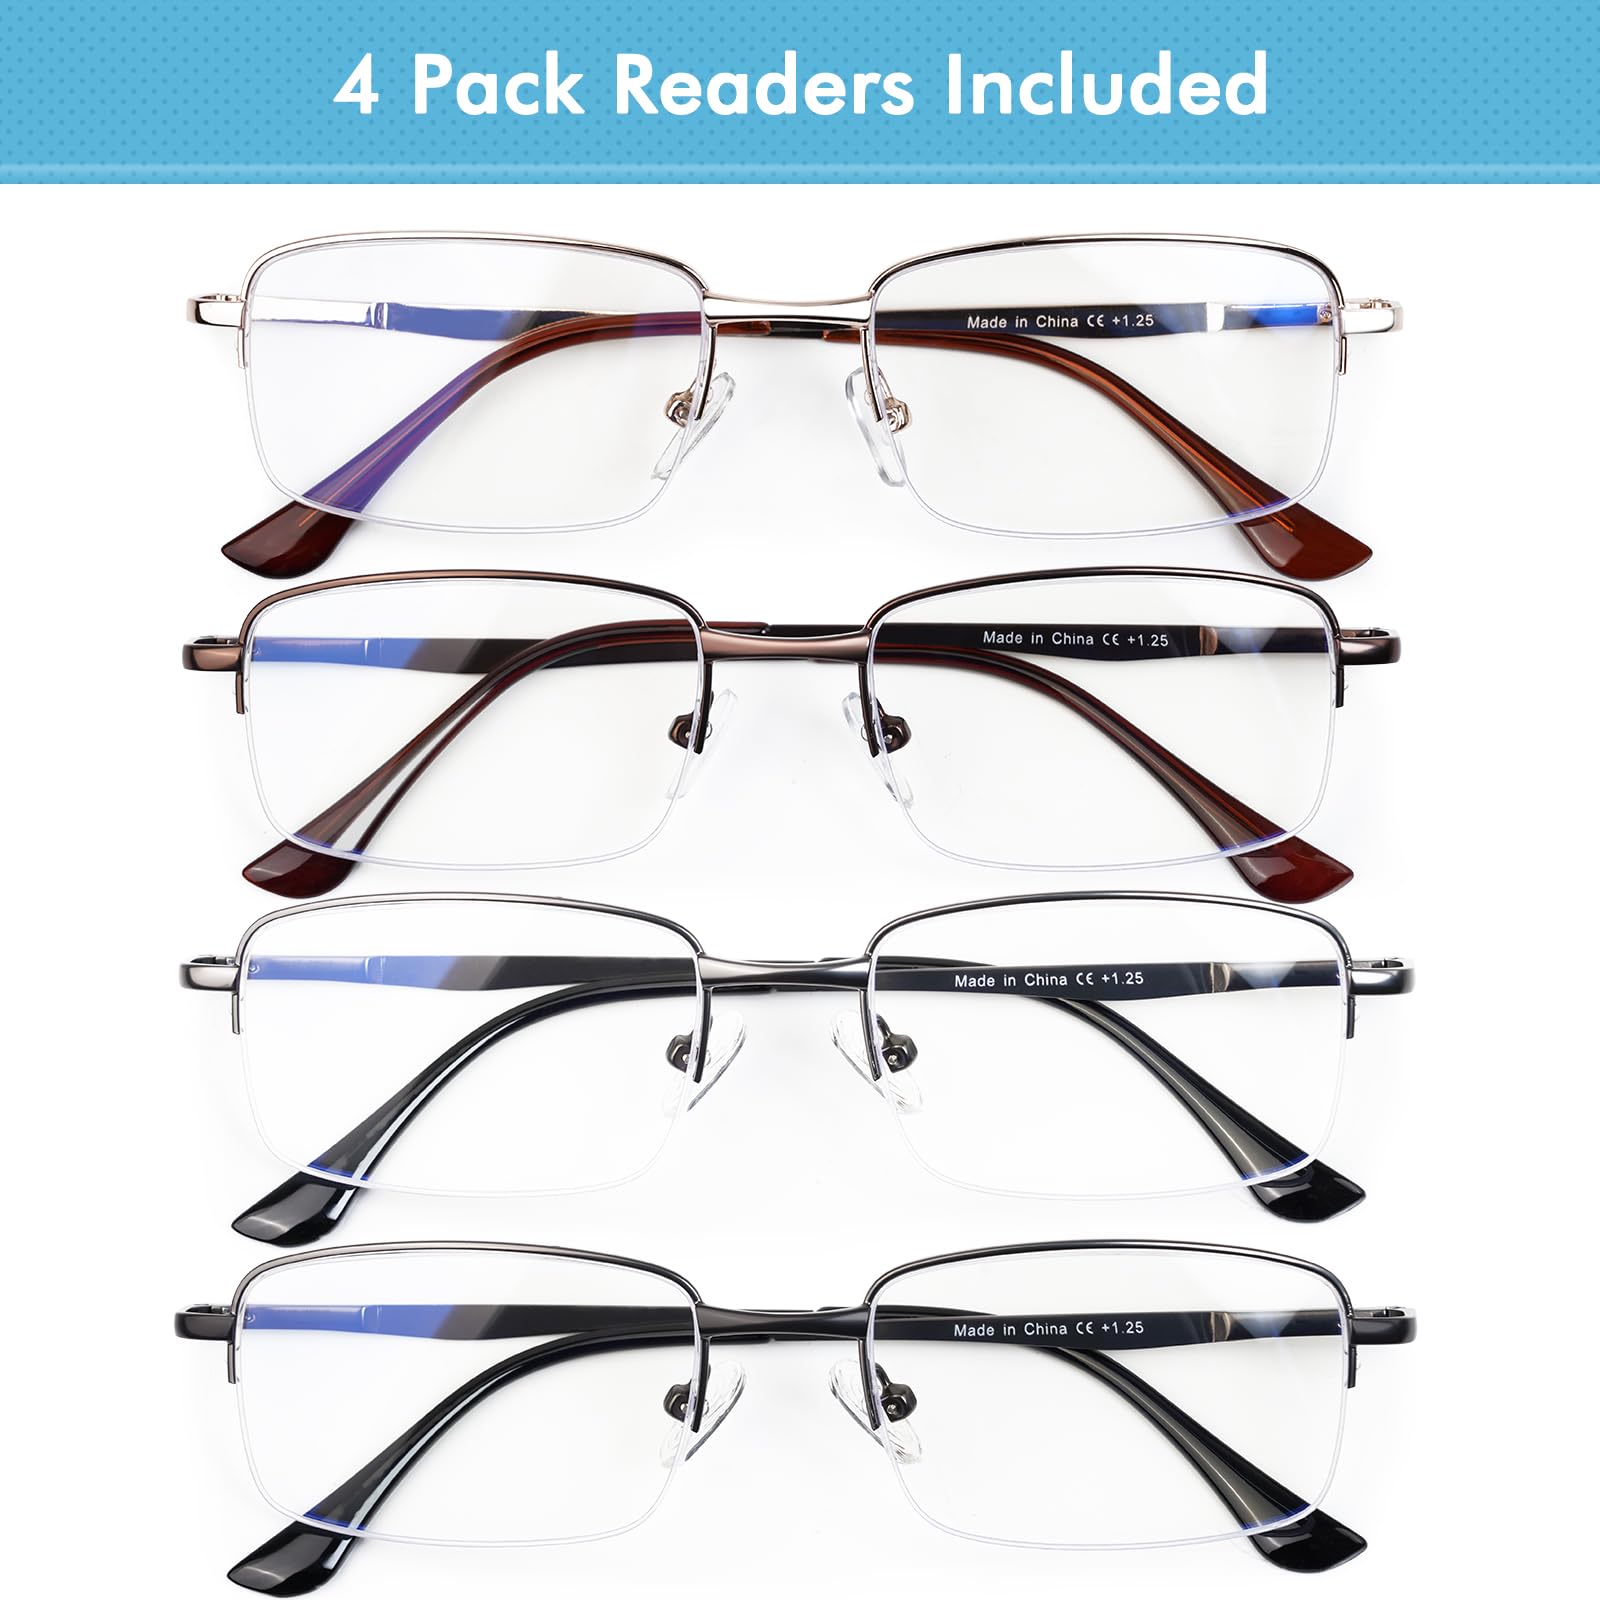 FelixAim 4 Pack Blue Light Blocking Reading Glasses for Men 3.0 Half Rim Metal Readers with Spring Hinge Computer Eyeglasses